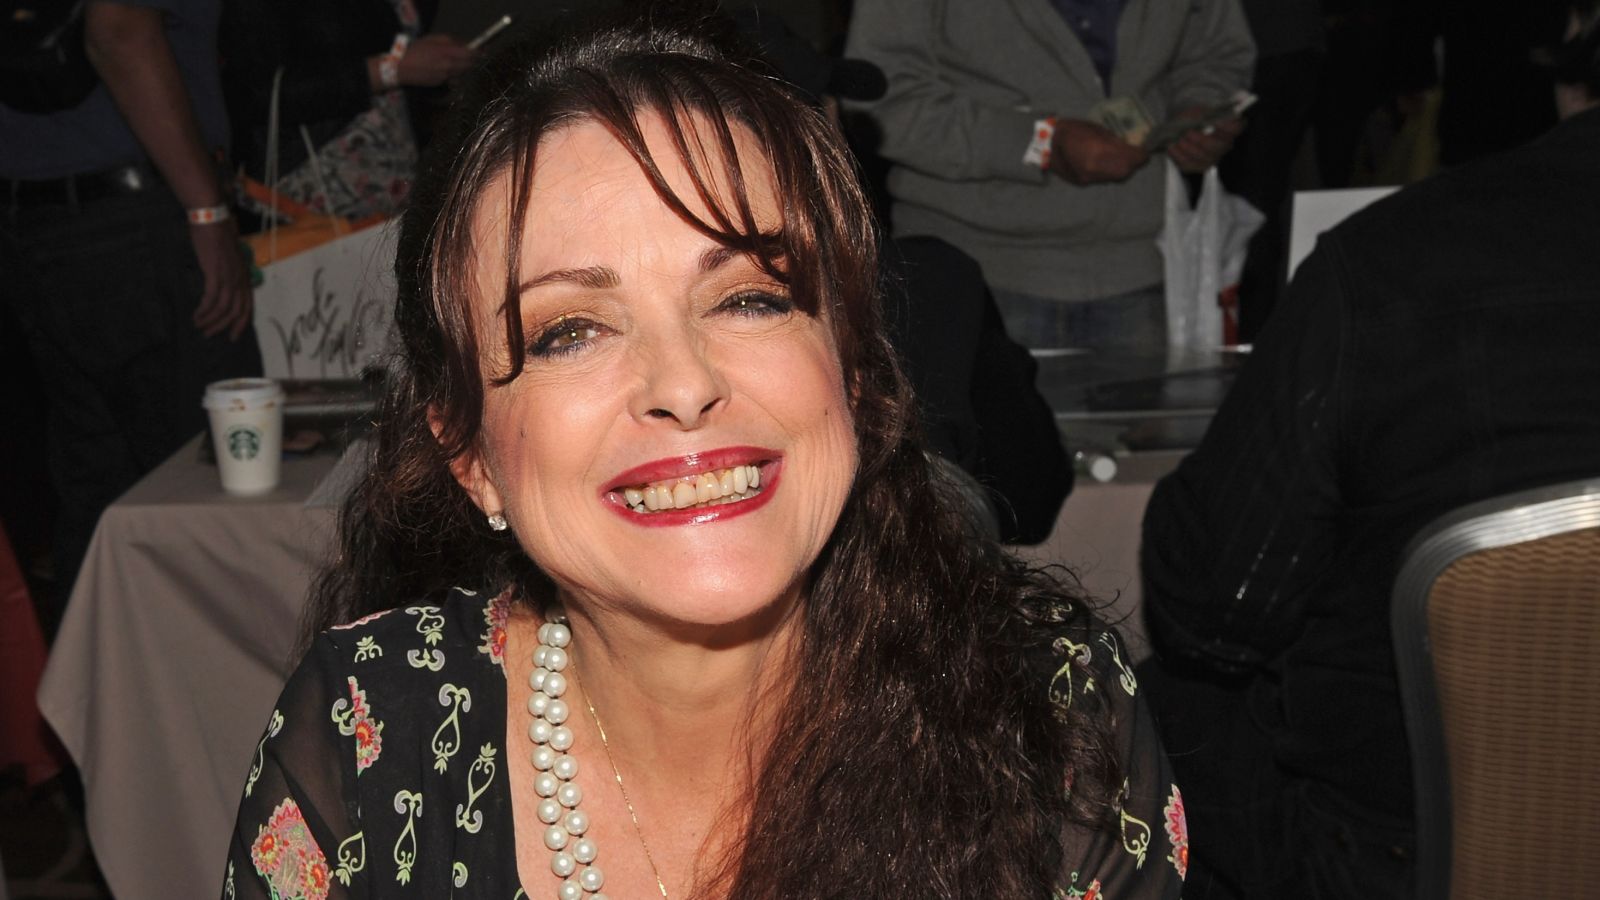 Lisa Loring: Original Wednesday Addams actress dies age 64 after stroke ...